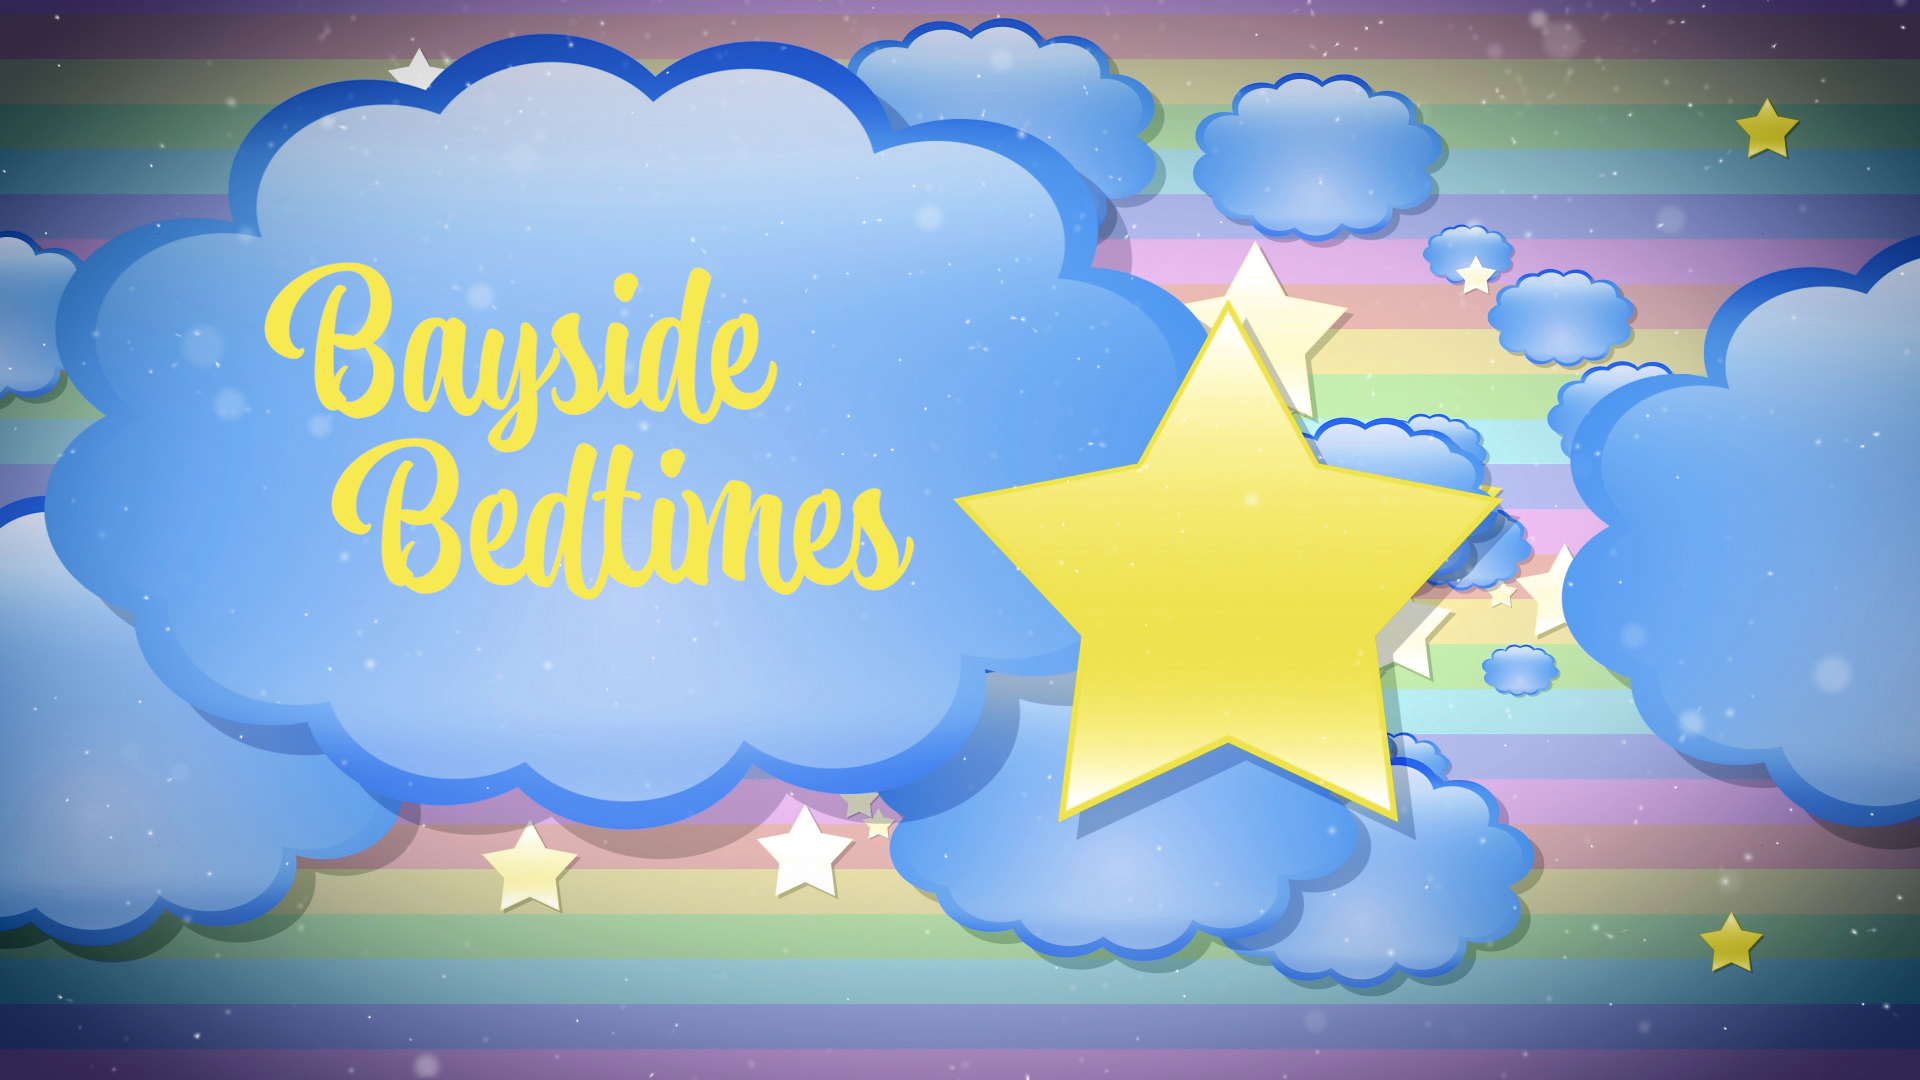 Bayside Bedtimes logo